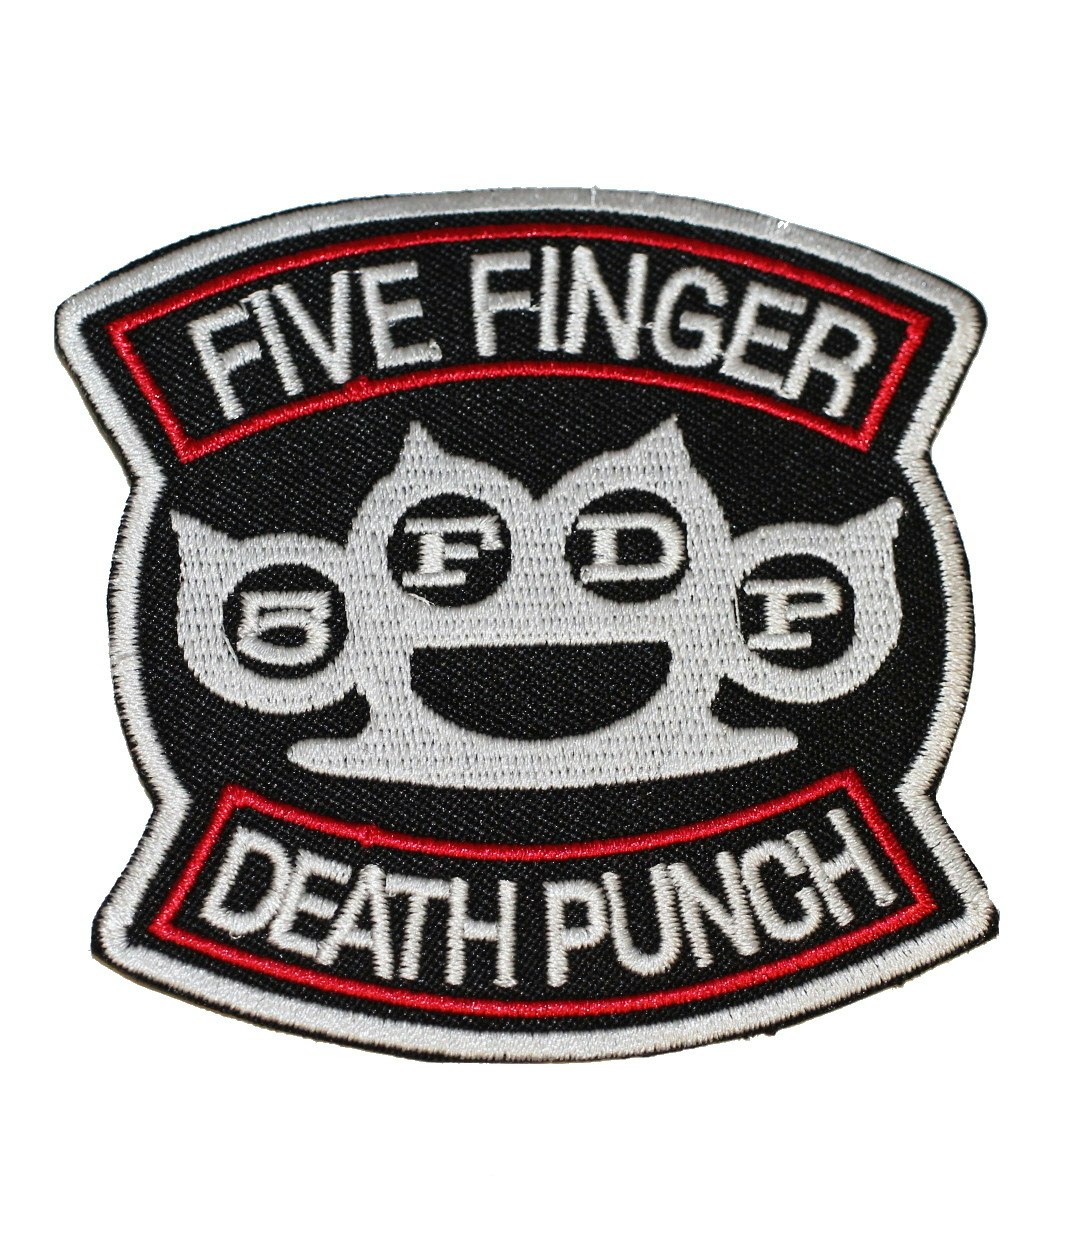 Five finger death punch Knuckle logo patch